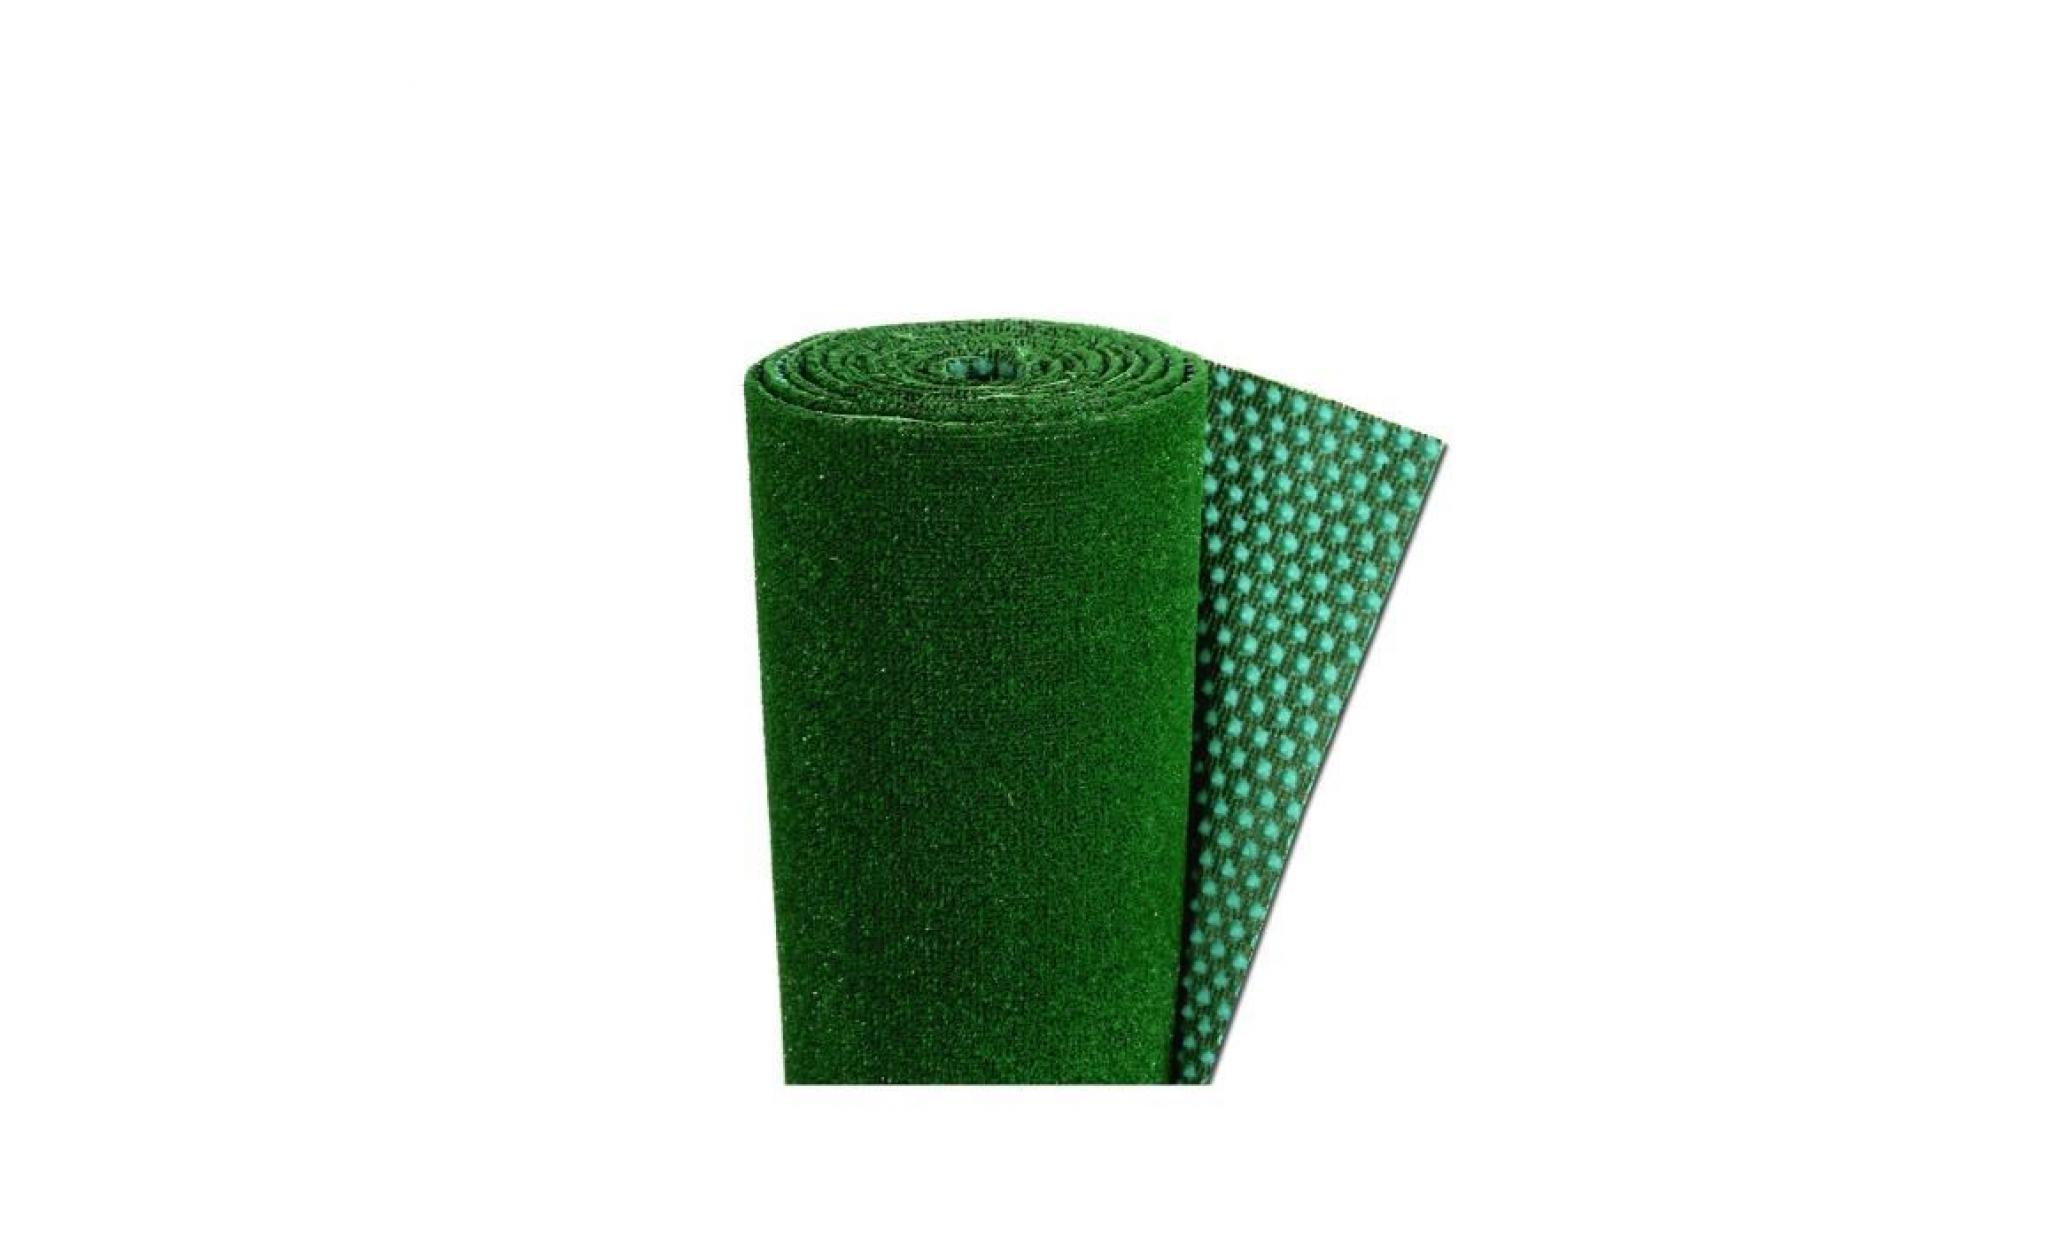 york   tapis type gazon artificiel avec nubs – pour jardin, terrasse, balcon   vert   [200x200 cm] pas cher